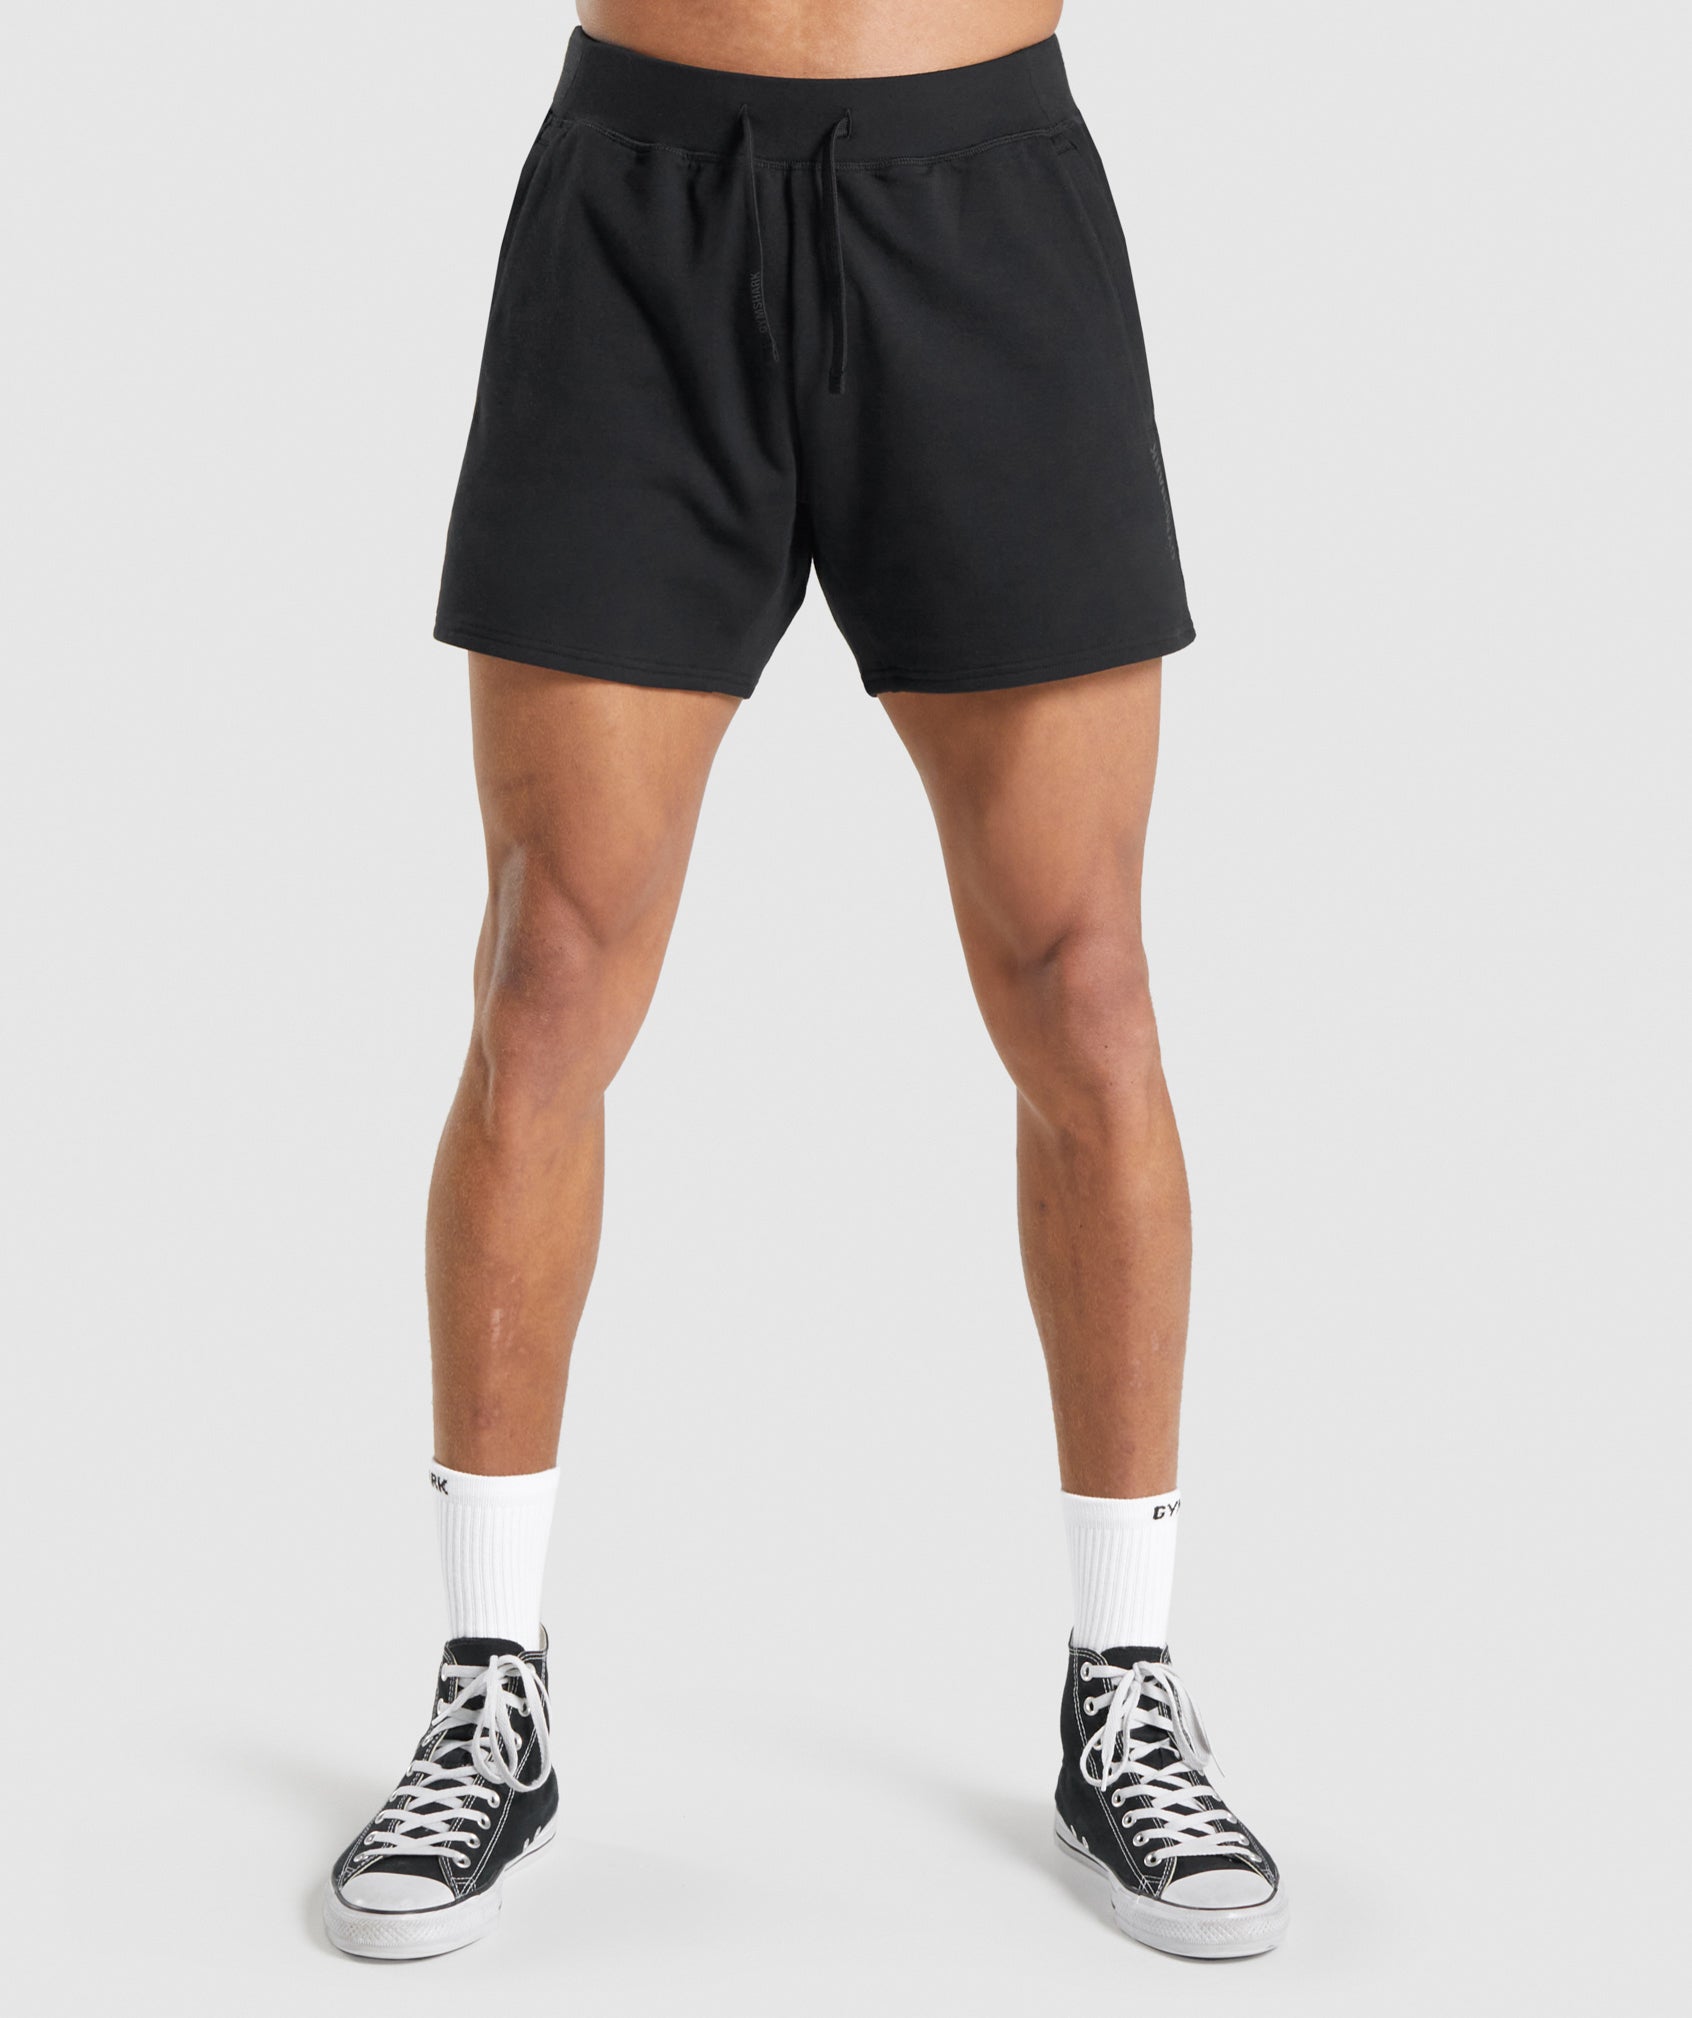 Chalk 5" Quad Shorts in Black - view 1